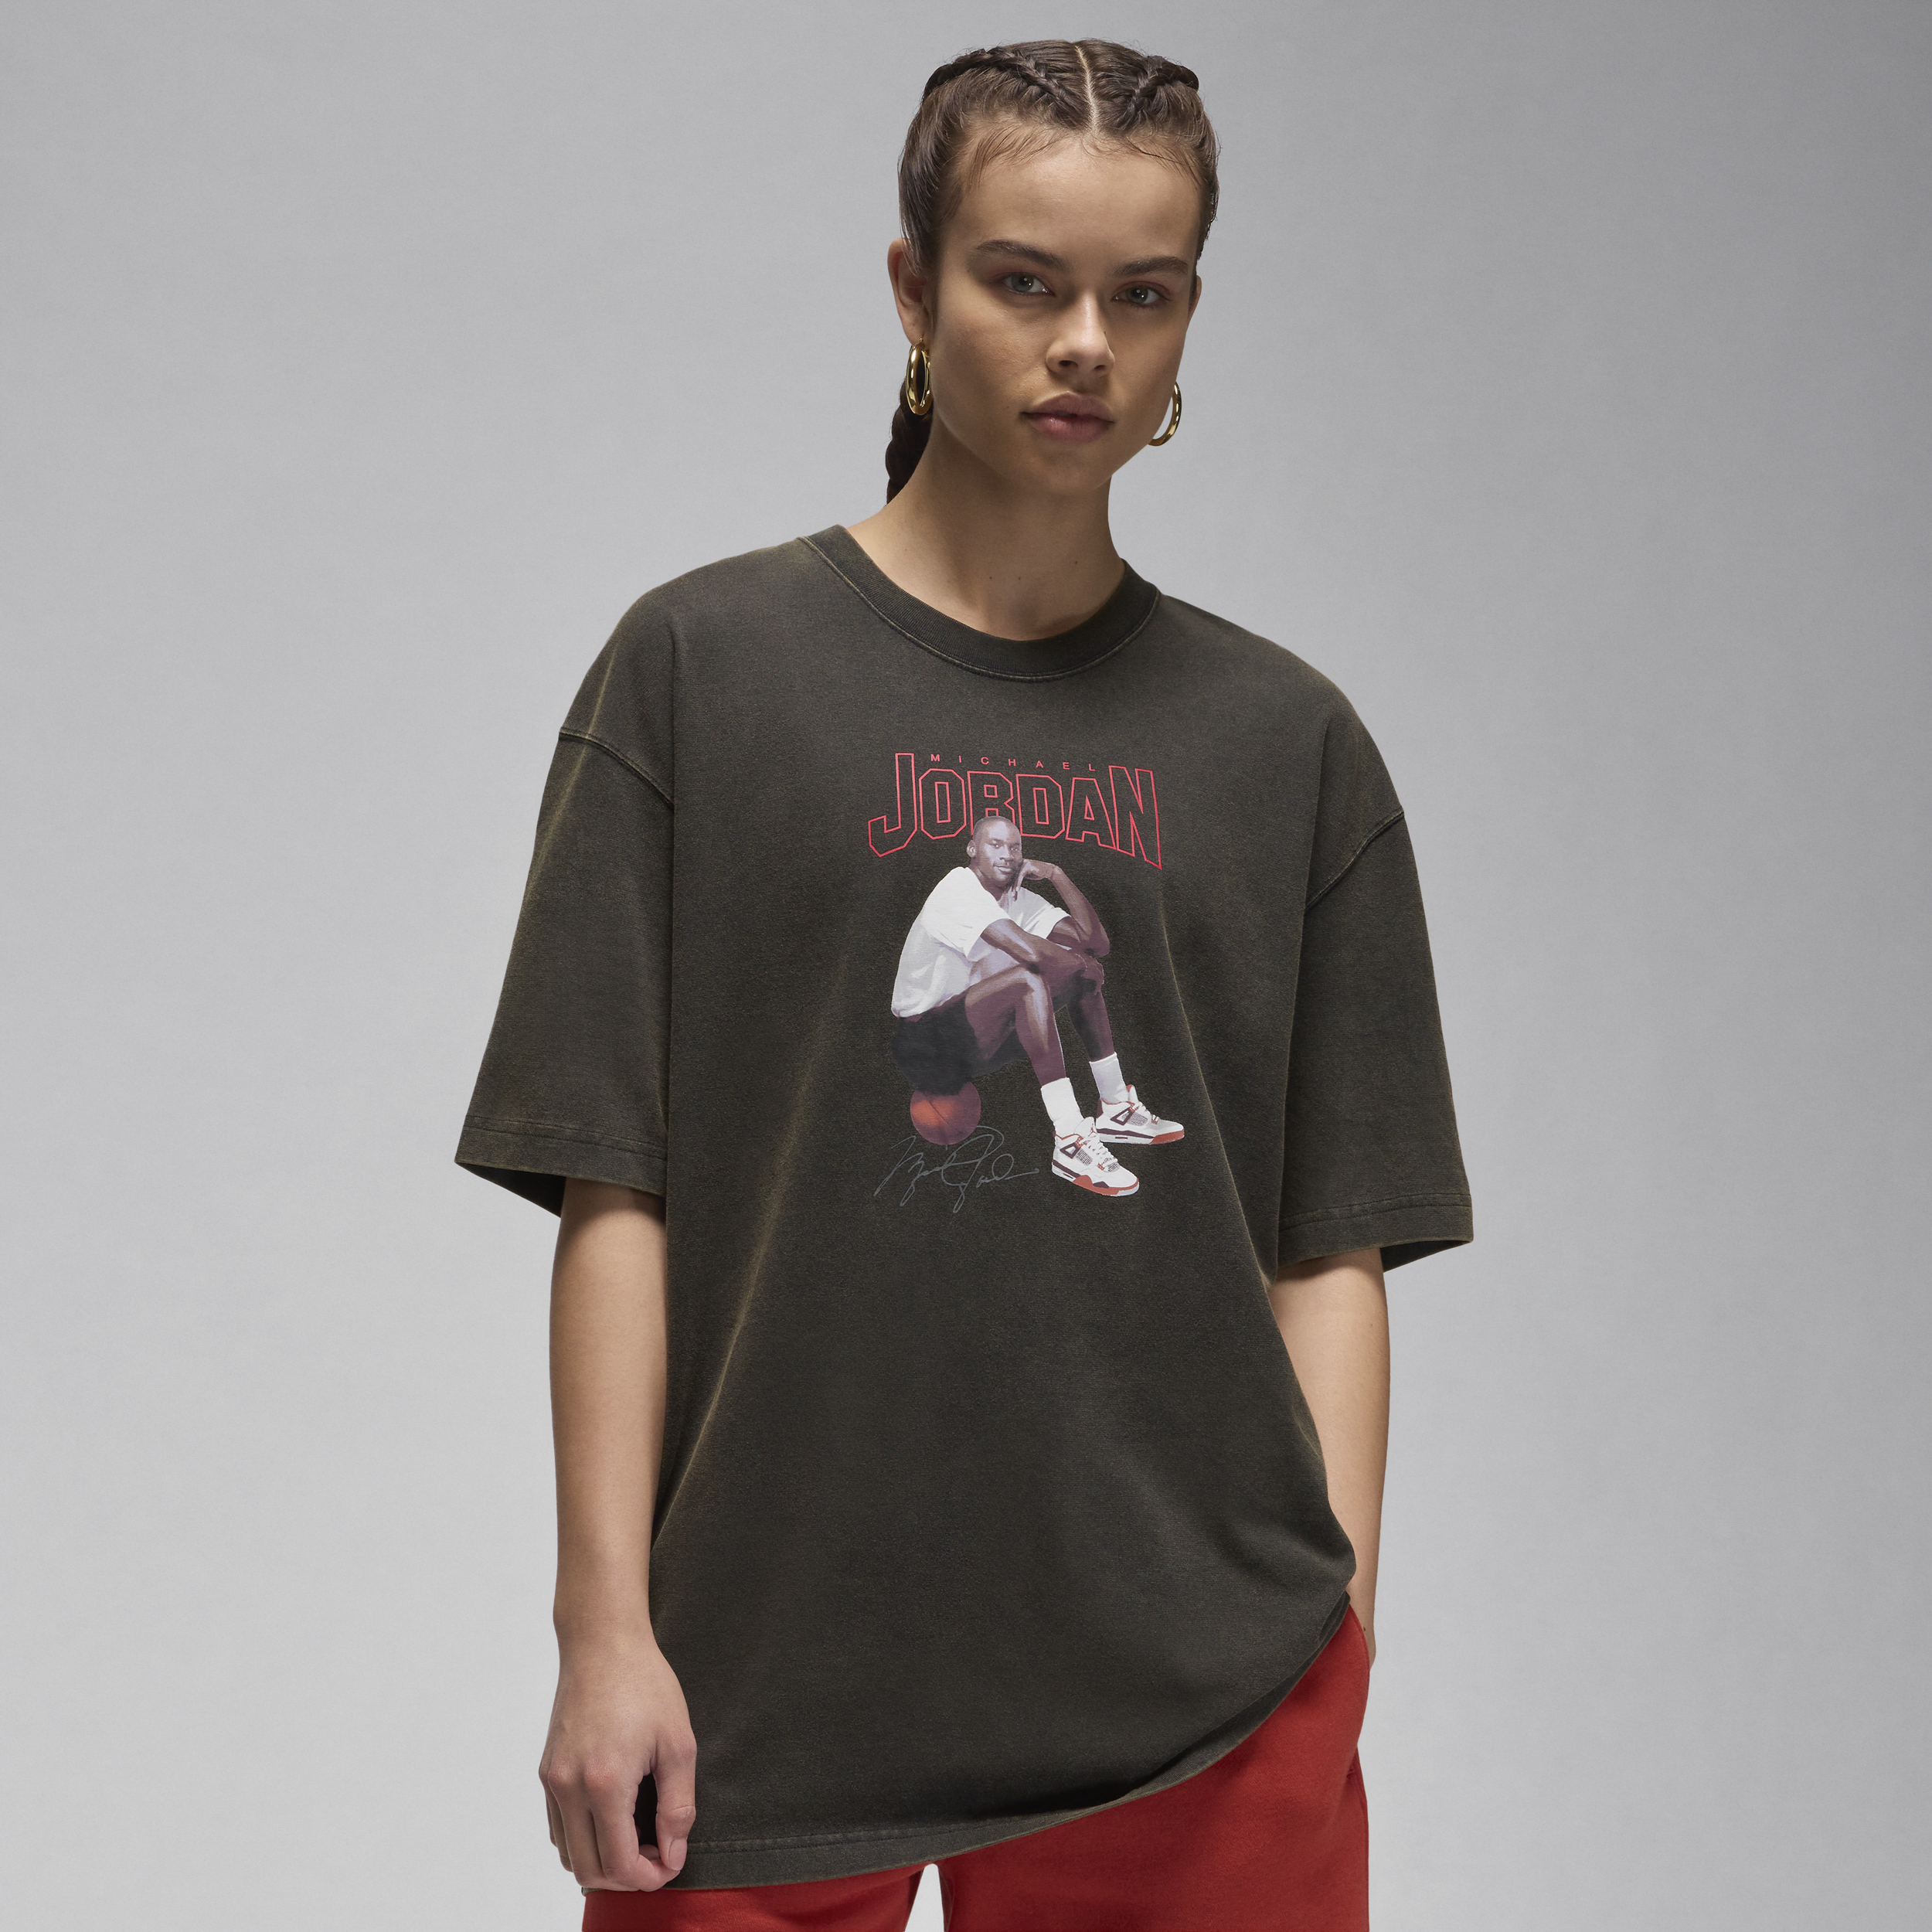 Nike T-shirt oversize con grafica Jordan – Donna - Nero